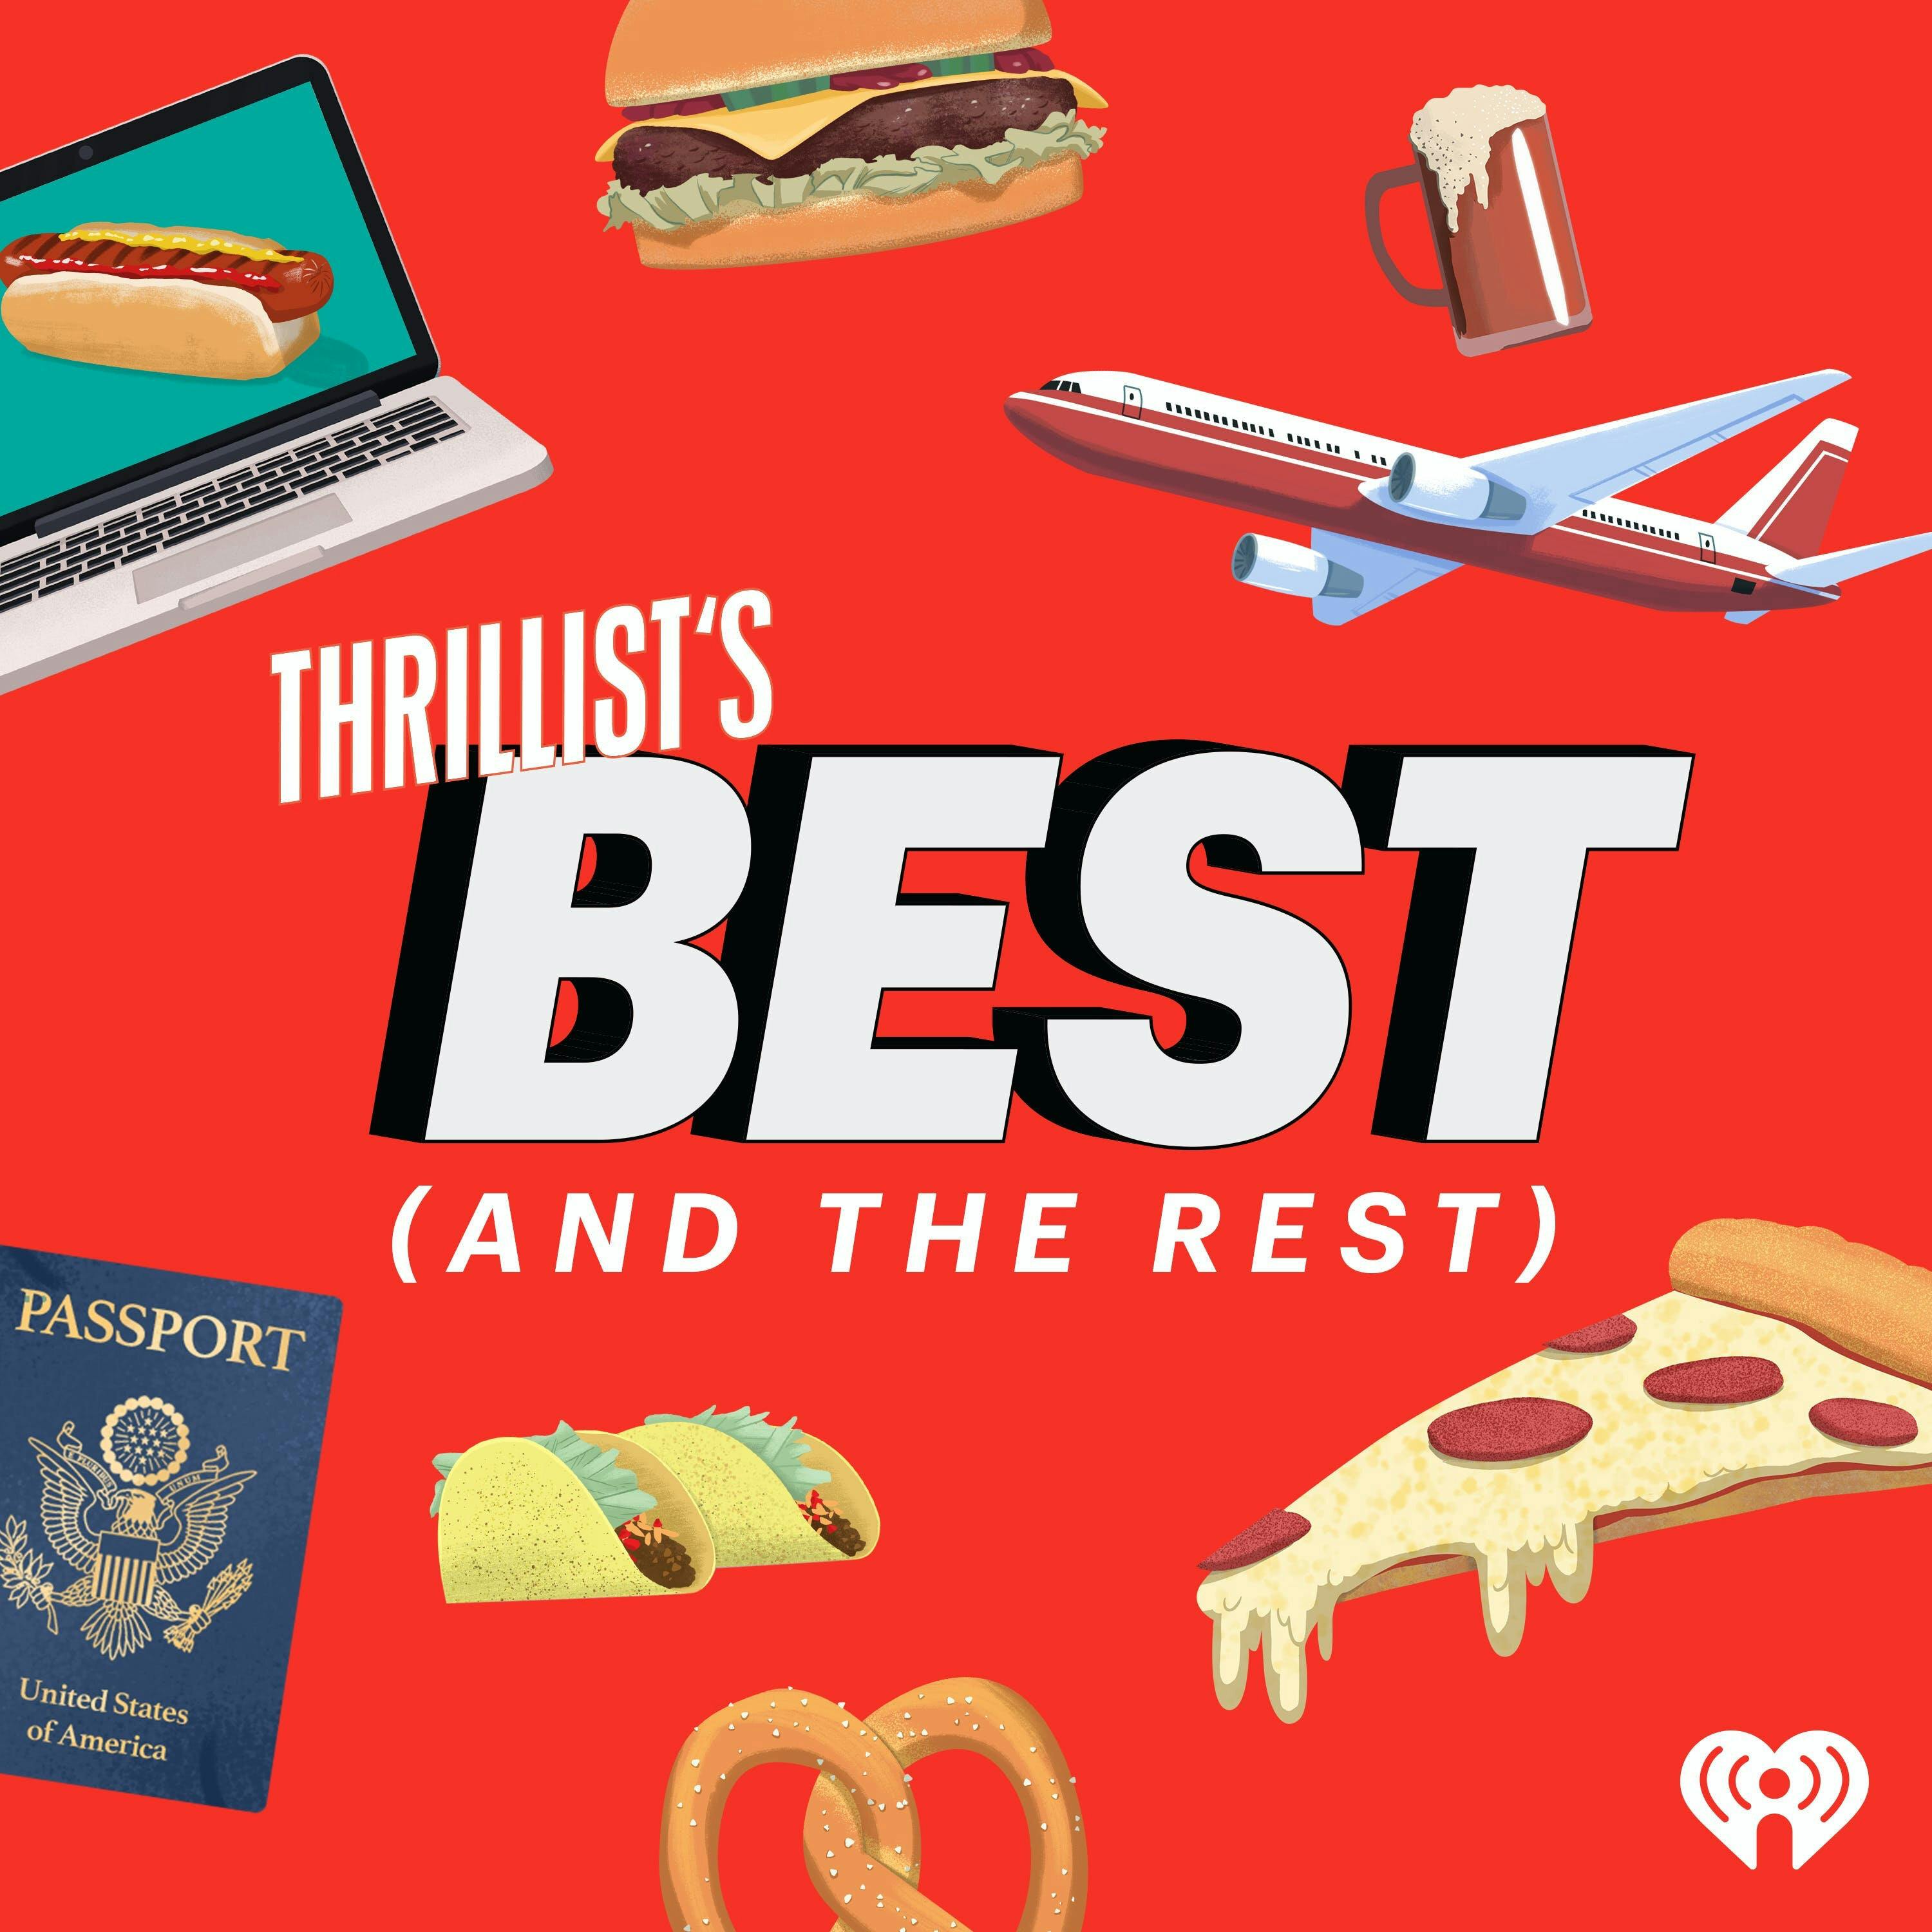 THRILLIST’S BEST: How to Find the Best Cheap Flight Deals Ever